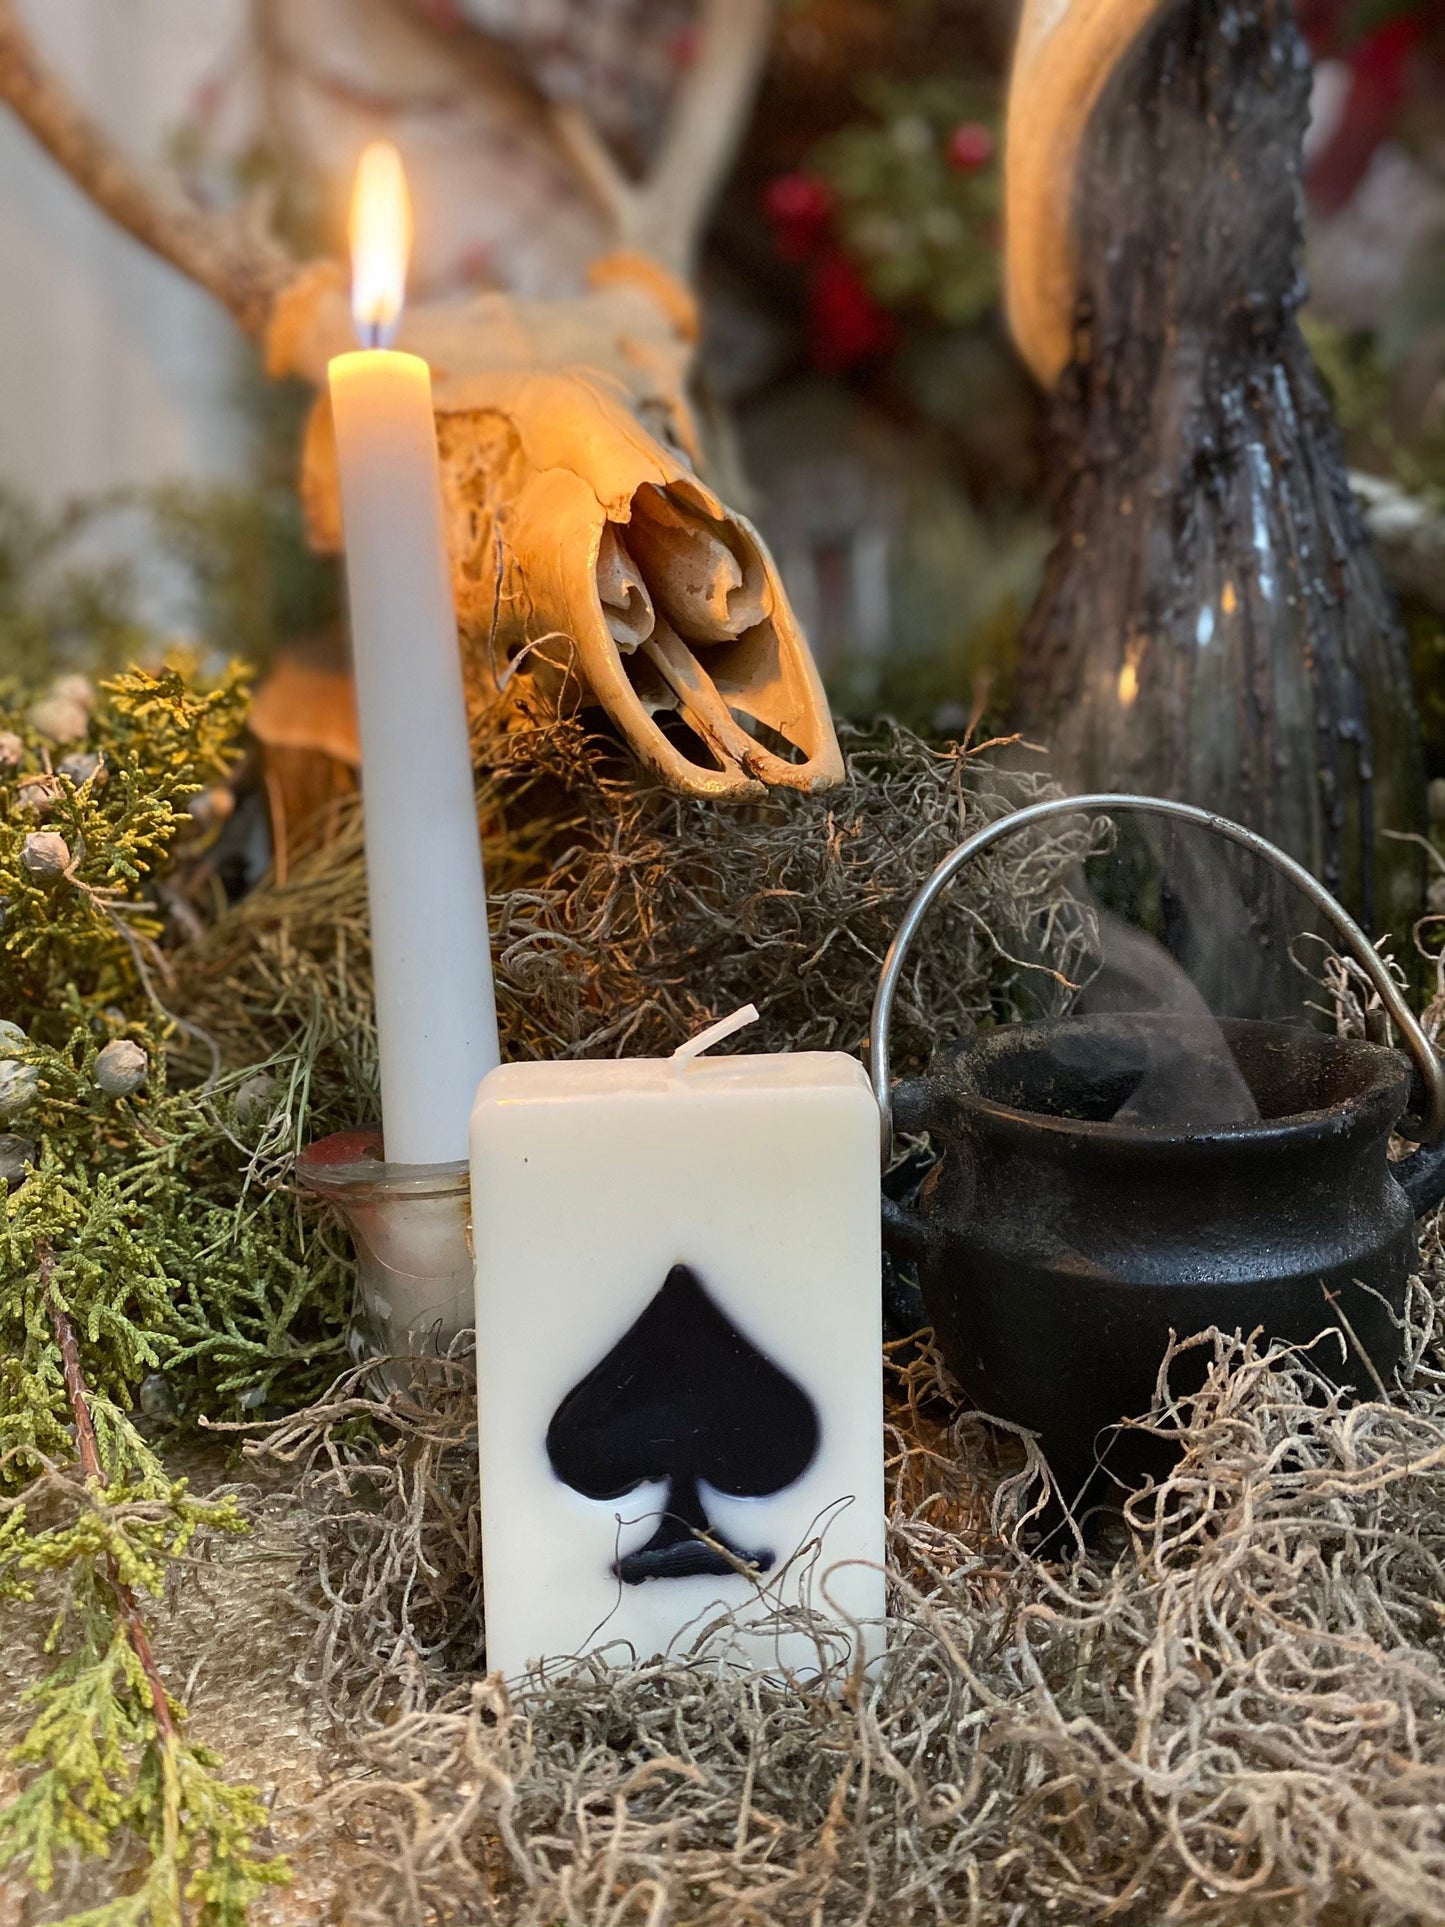 Playing Card Candle + Set + Conjure + Hoodoo + Folk Magic